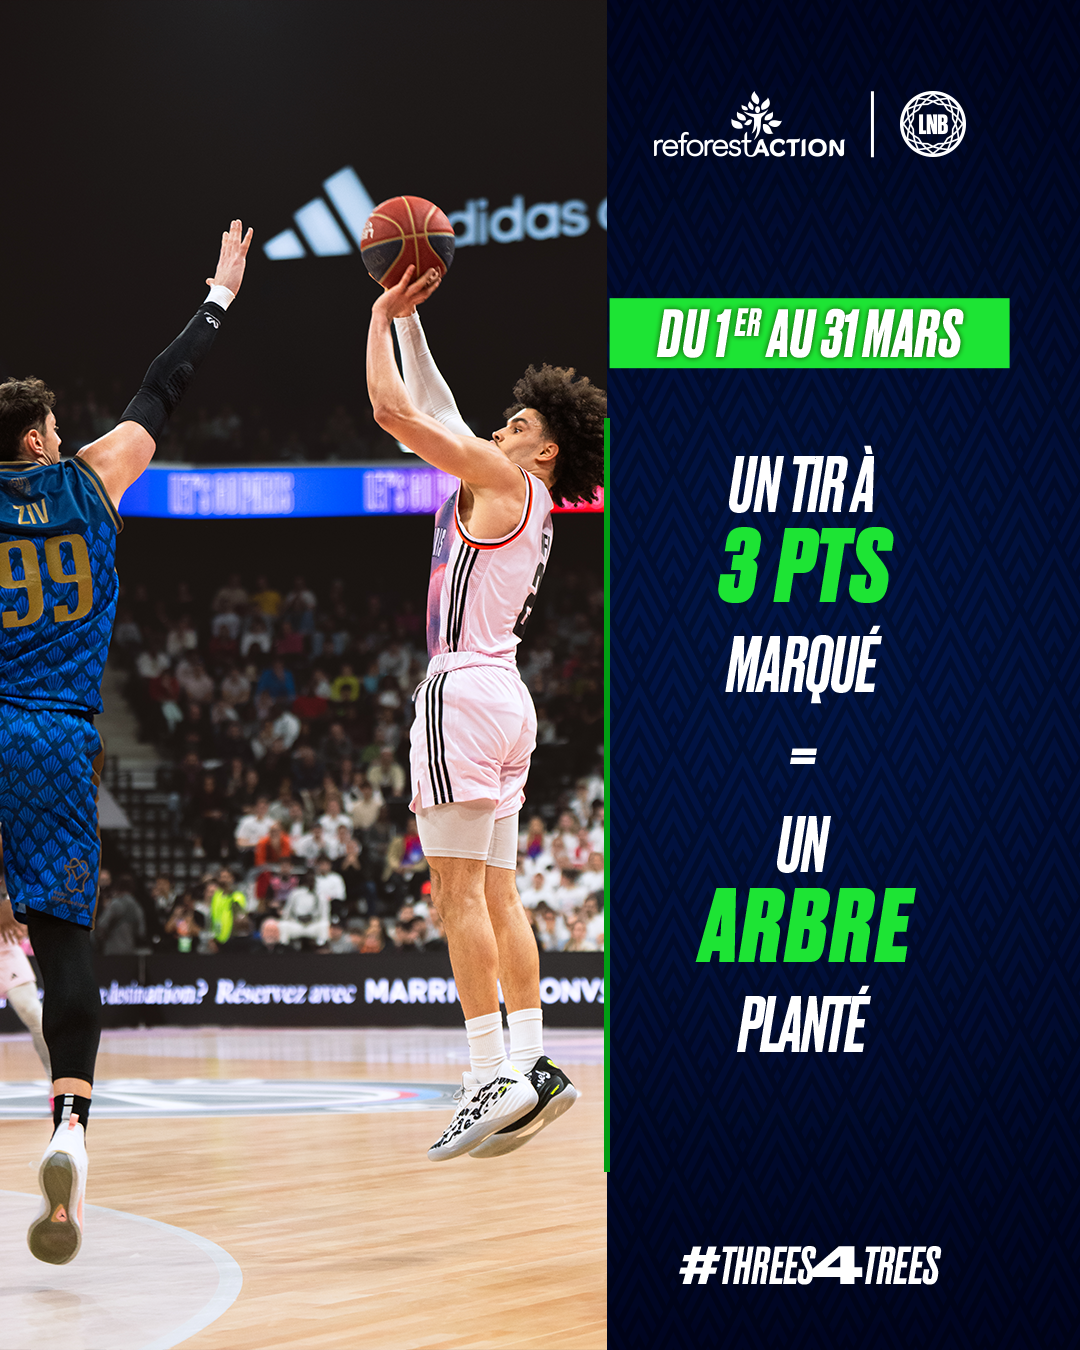 Paris celebrates the green game at the adidas arena – Paris Basketball